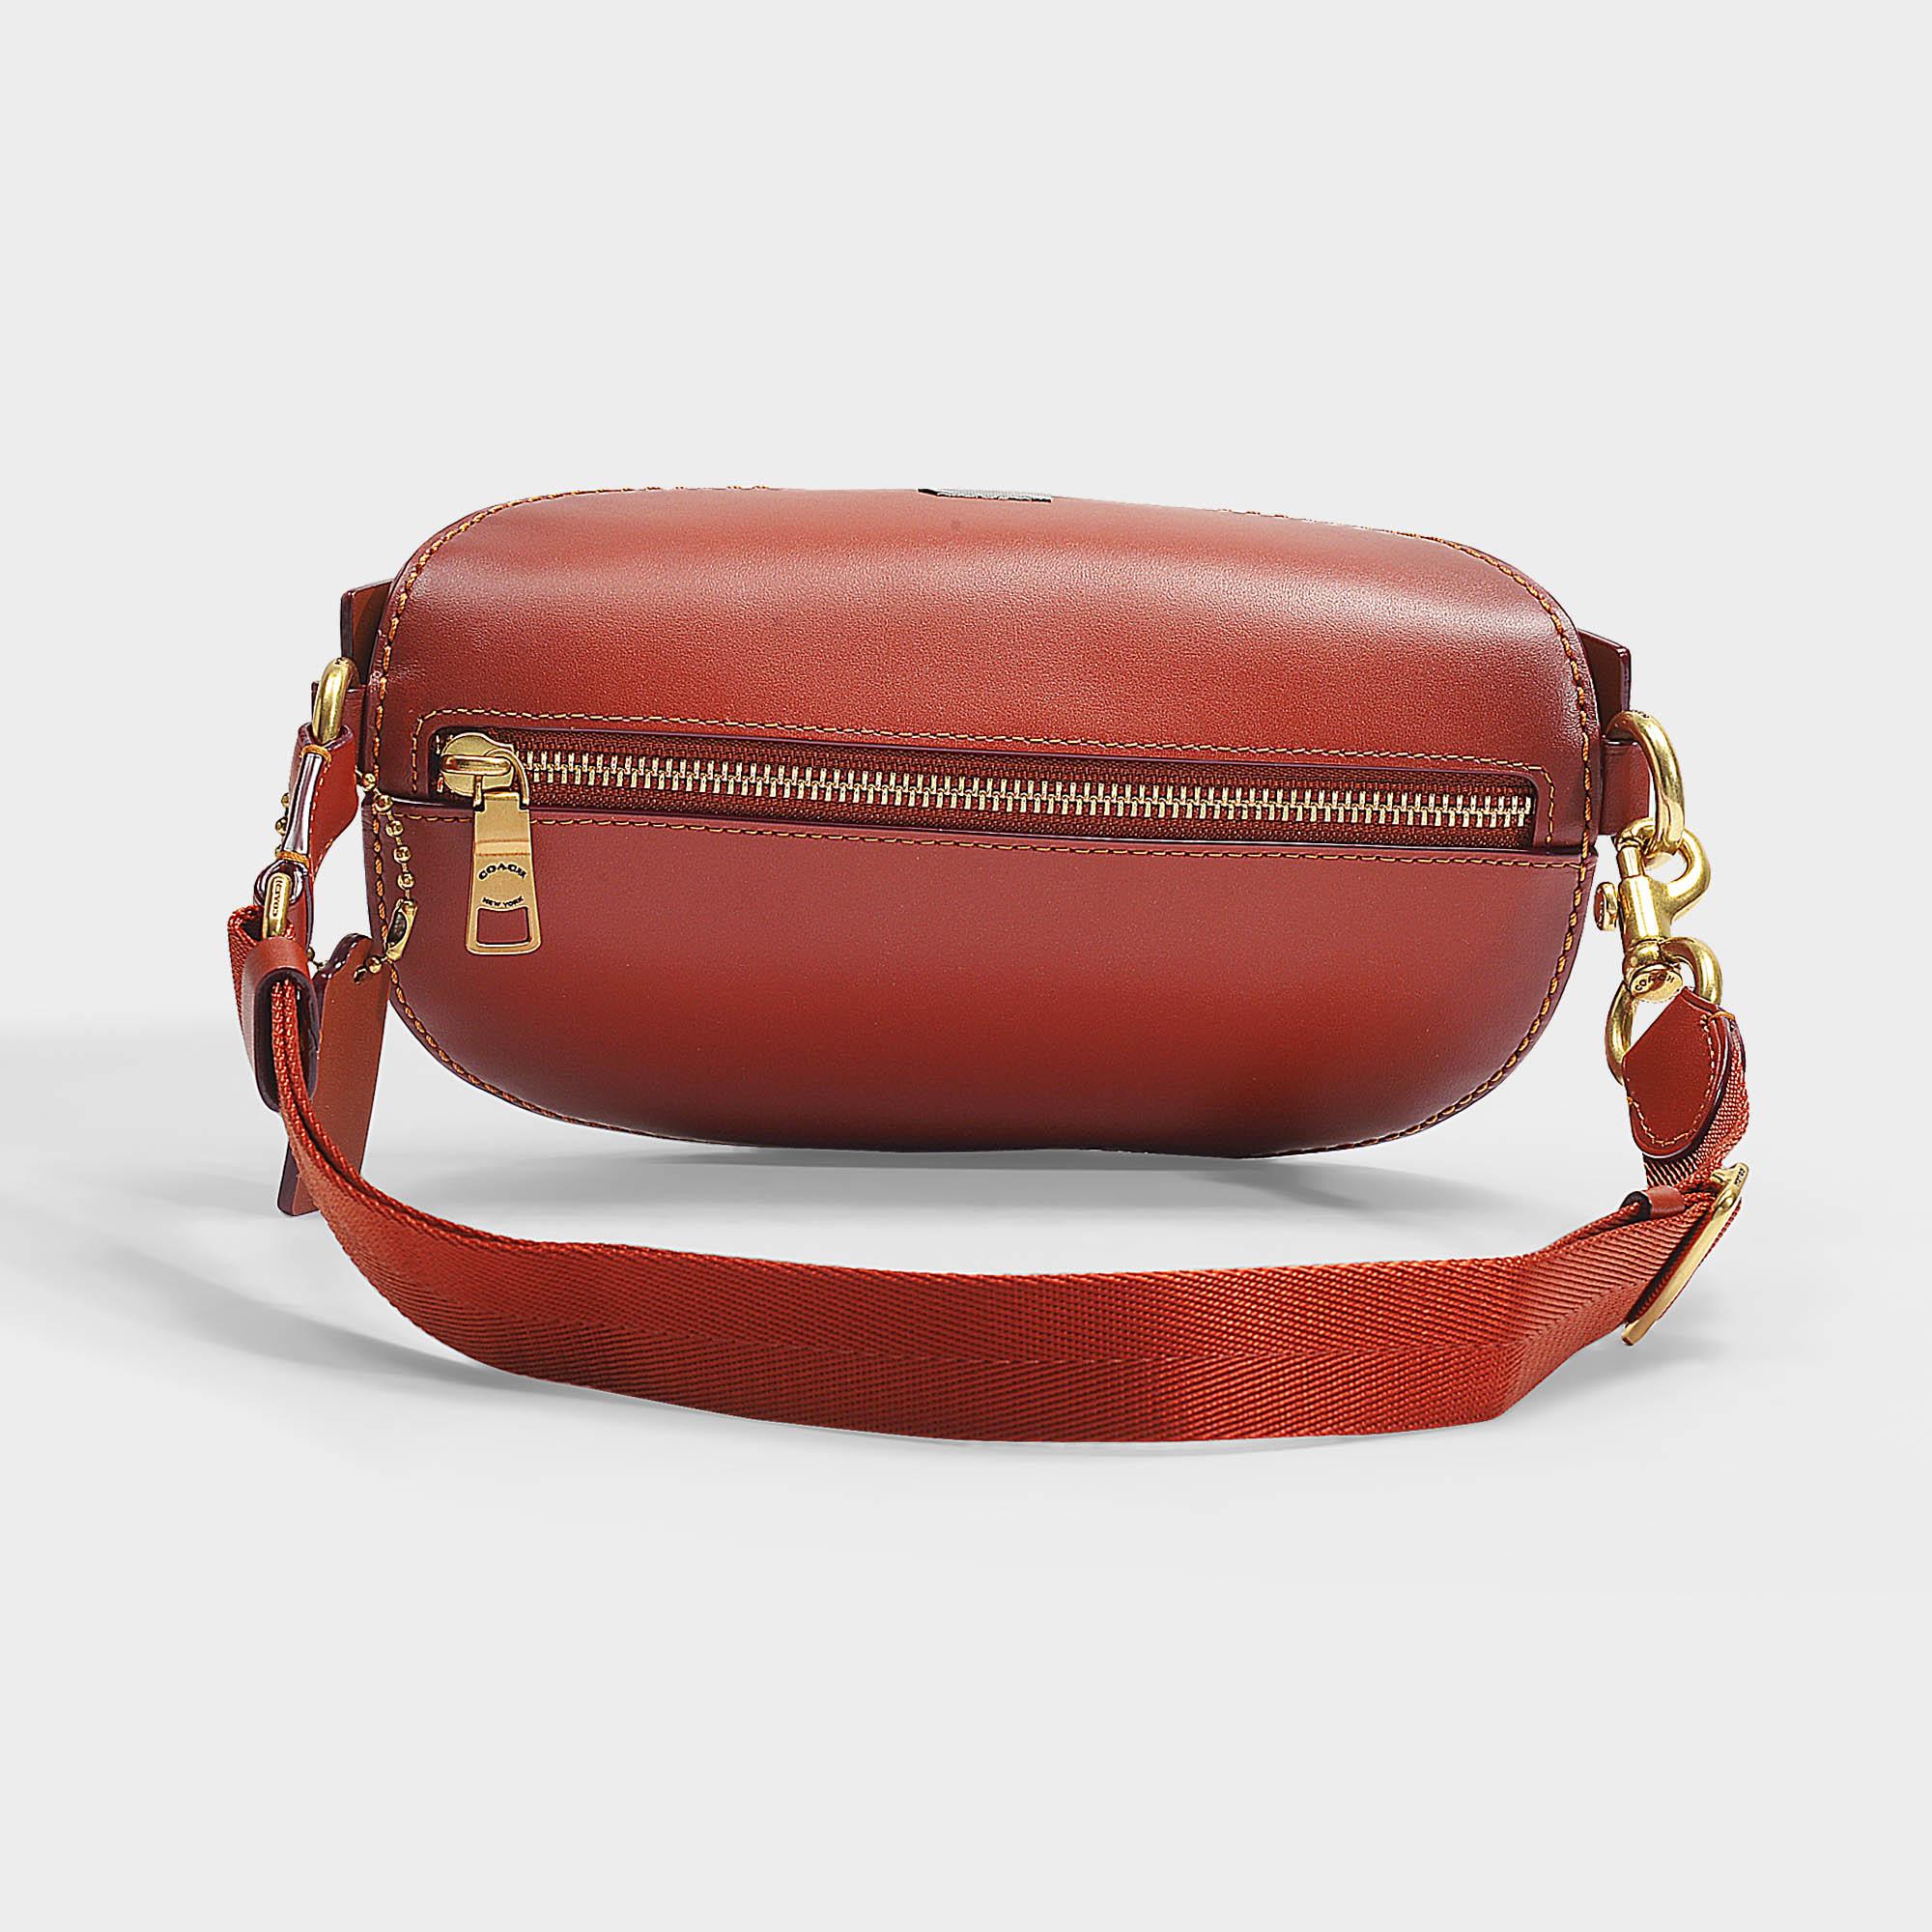 COACH Belt Bag In Signature Canvas in Tan/Rust/Brass (Brown) - Save 20% |  Lyst